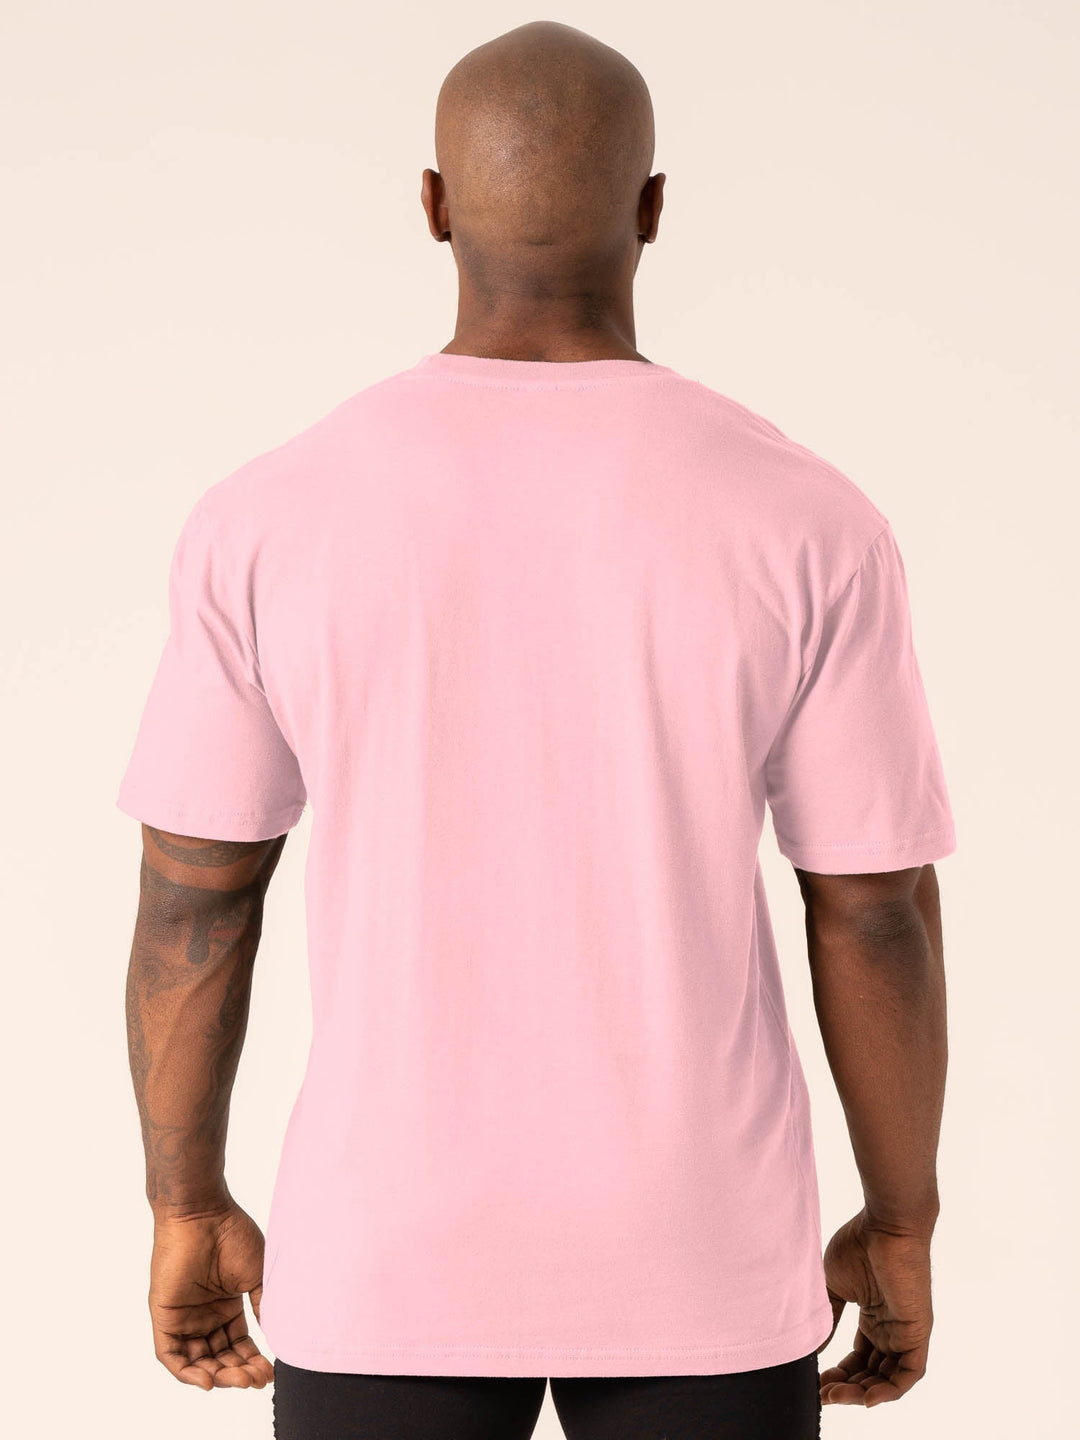 Grit Oversized T-Shirt - Pink Clothing Ryderwear 